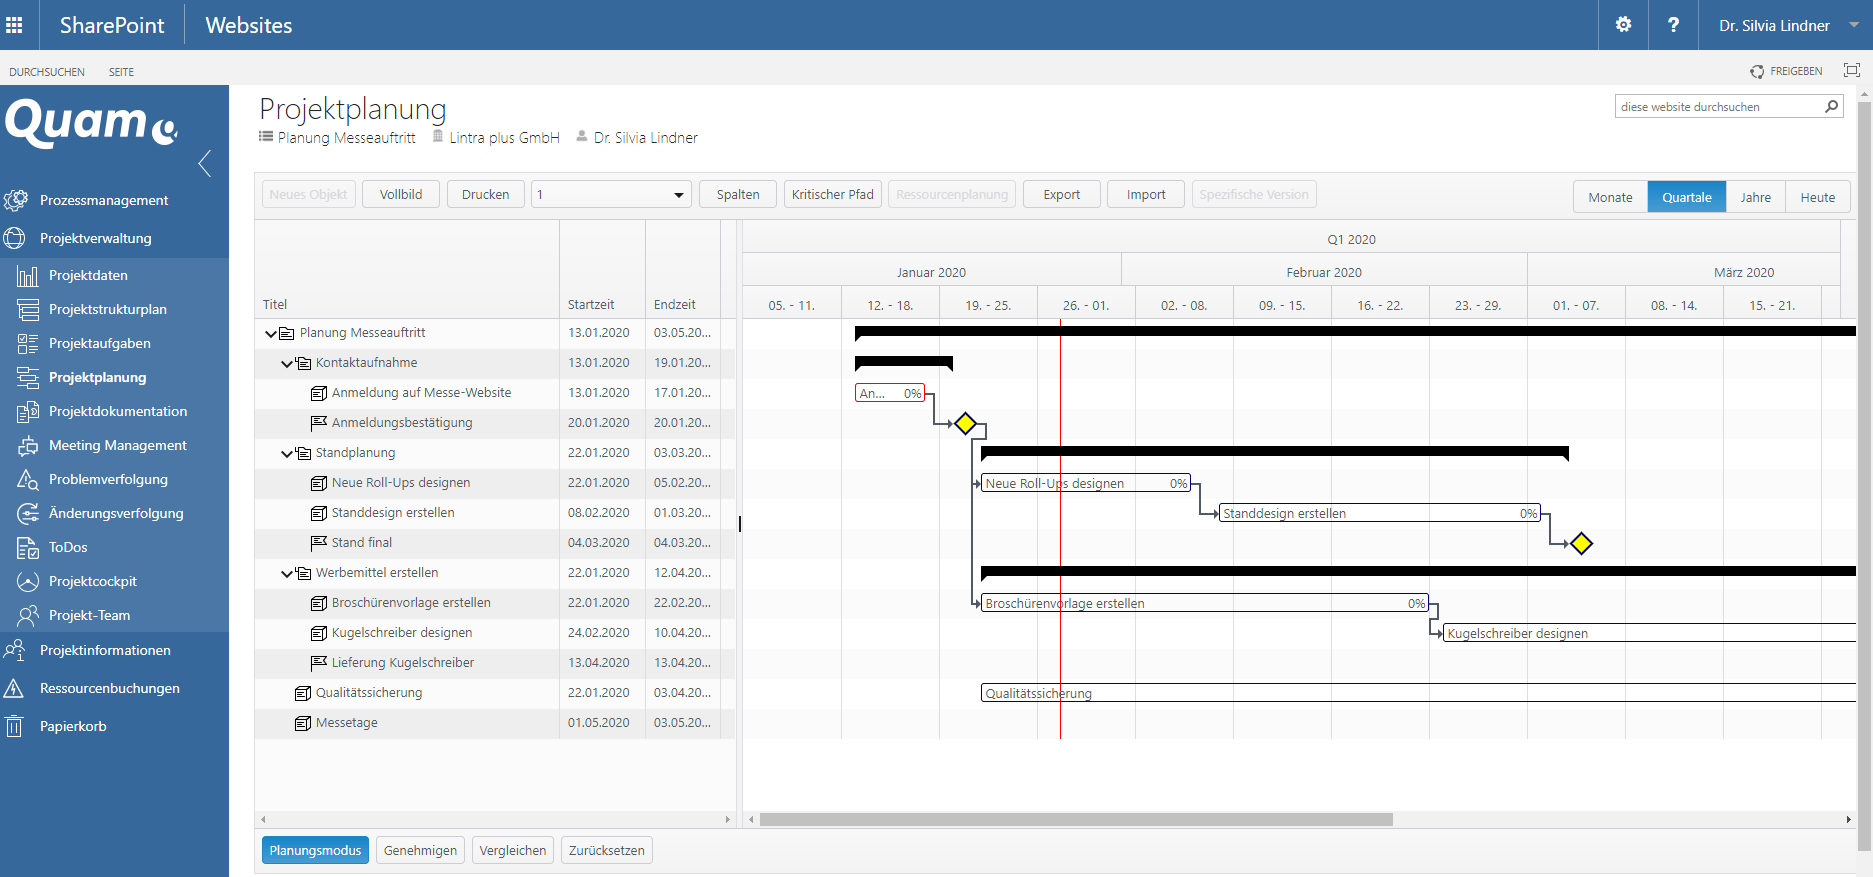 Projektplanungssoftware auf SharePoint Basis (Screenshot aus Quam Software zur Projektplanung)